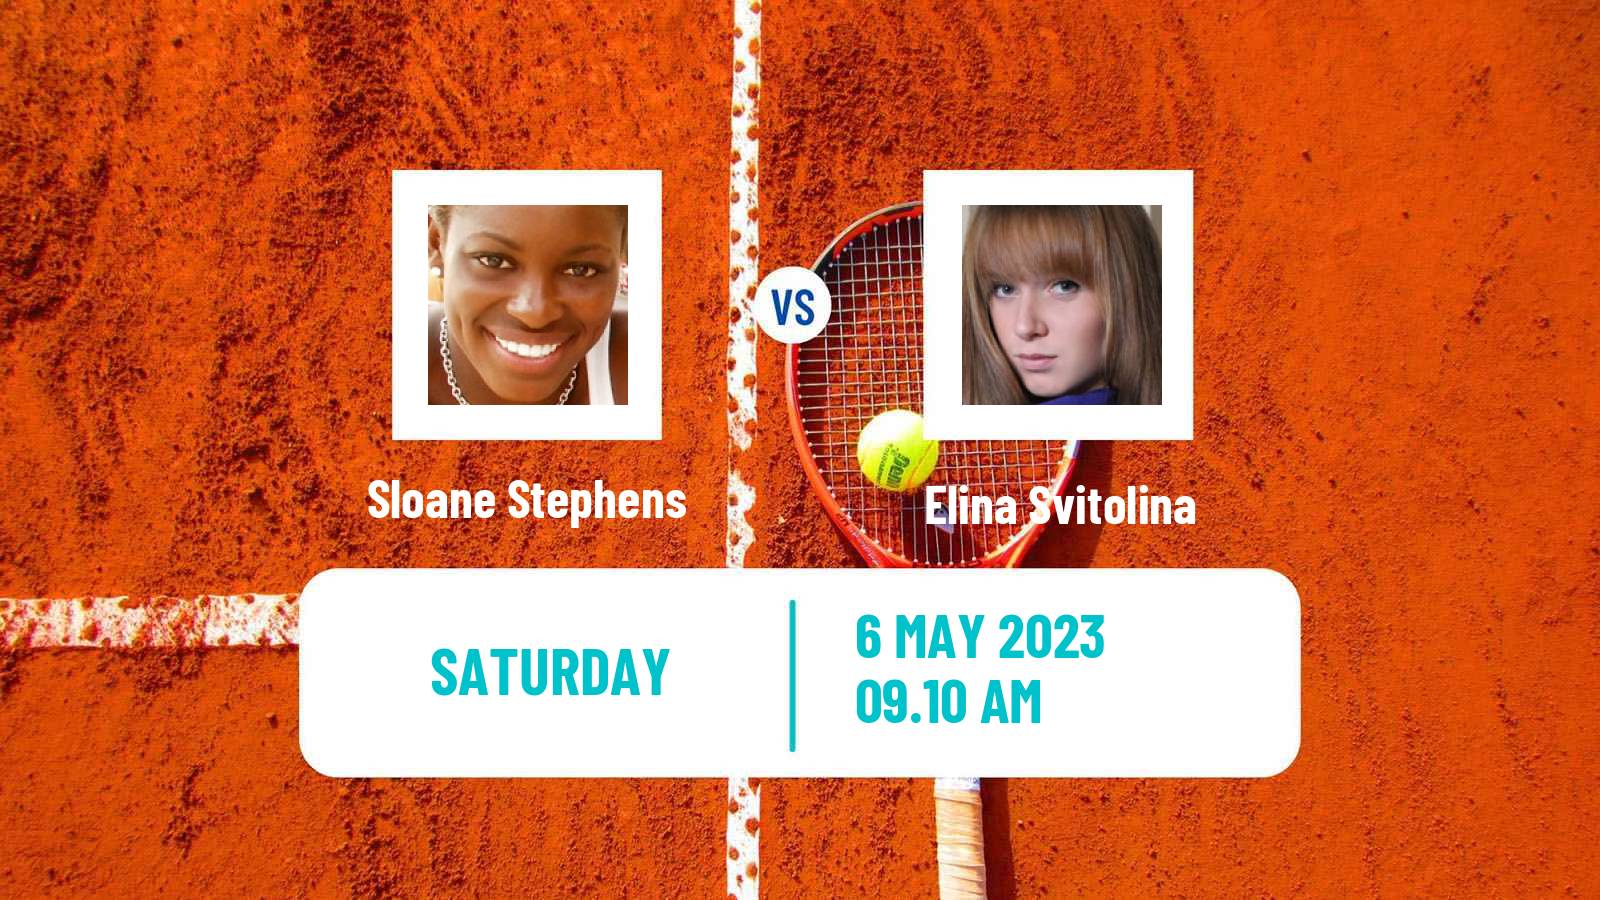 Tennis ATP Challenger Sloane Stephens - Elina Svitolina